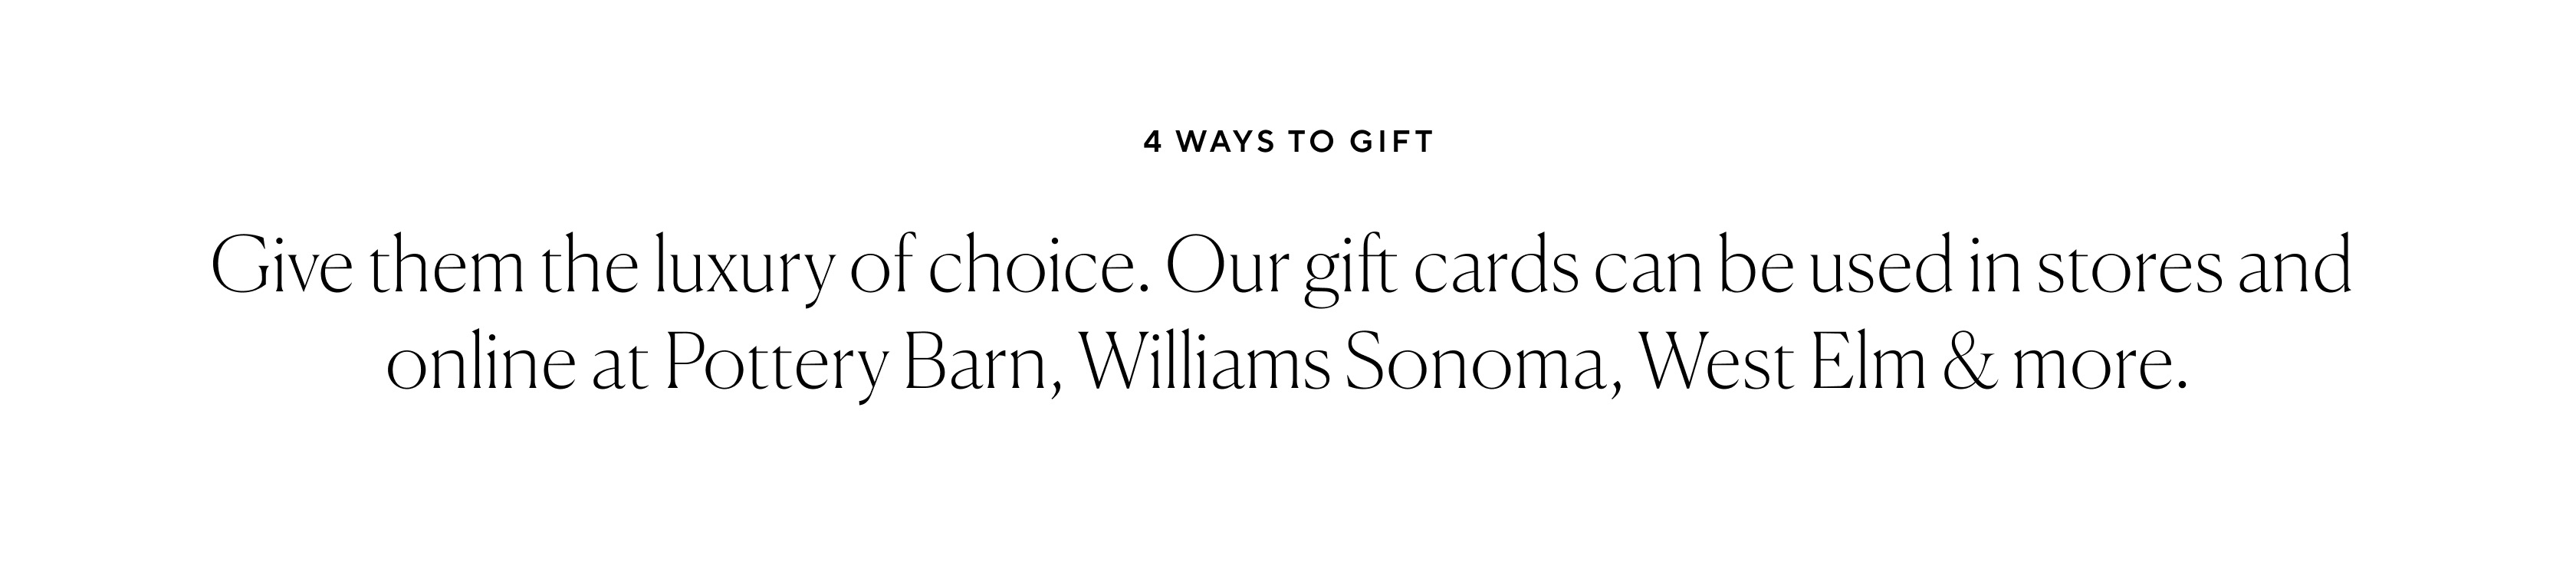 4 Ways to Gift